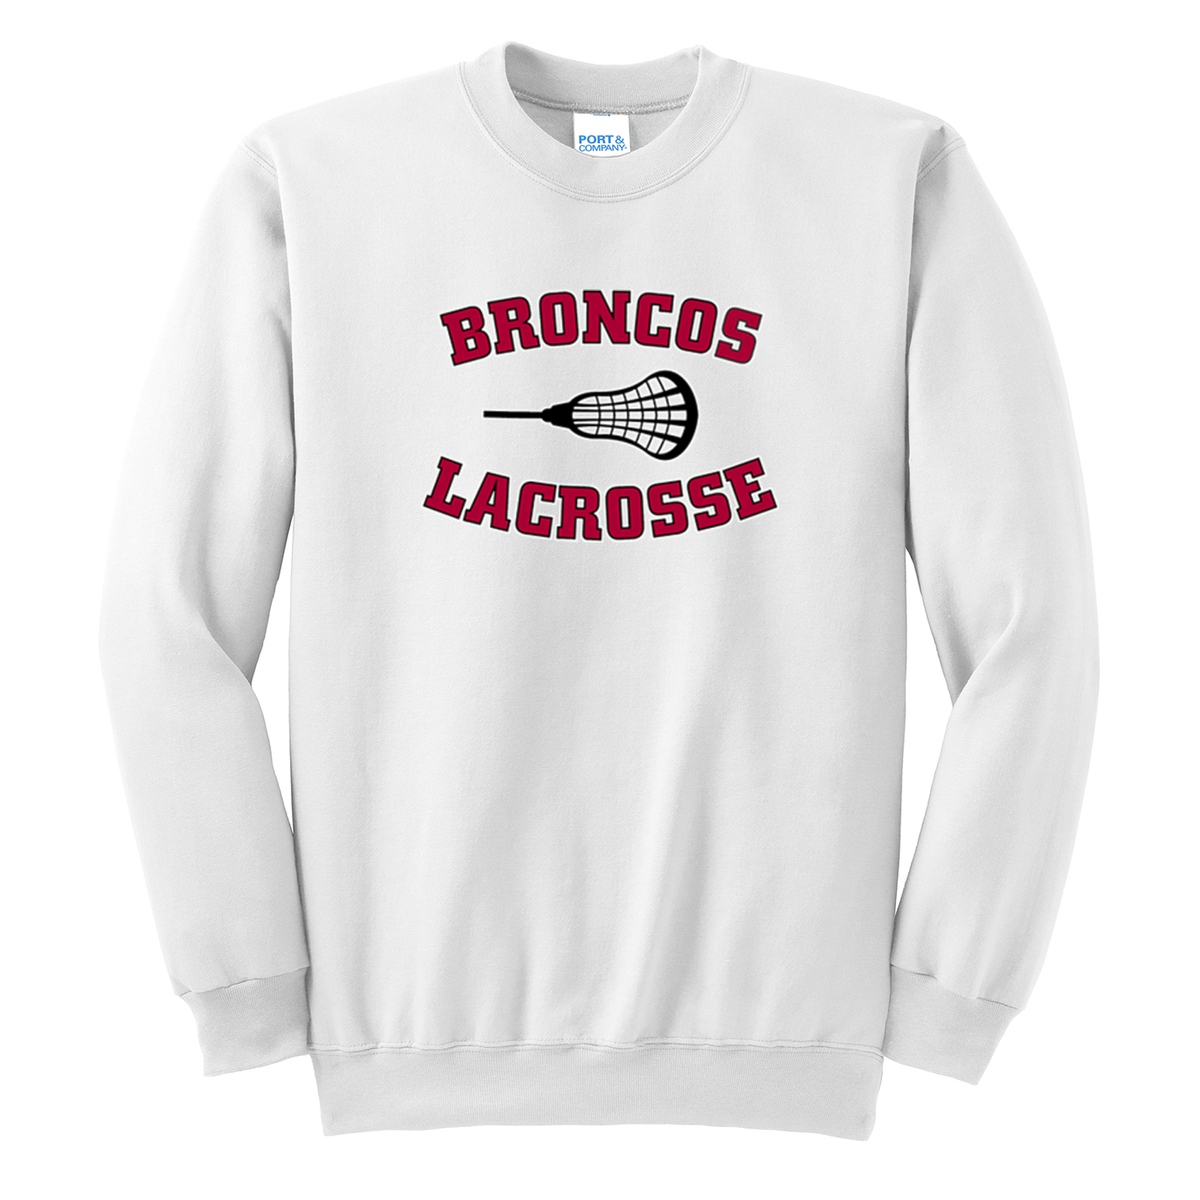 Bailey Middle School Lacrosse Crew Neck Sweater